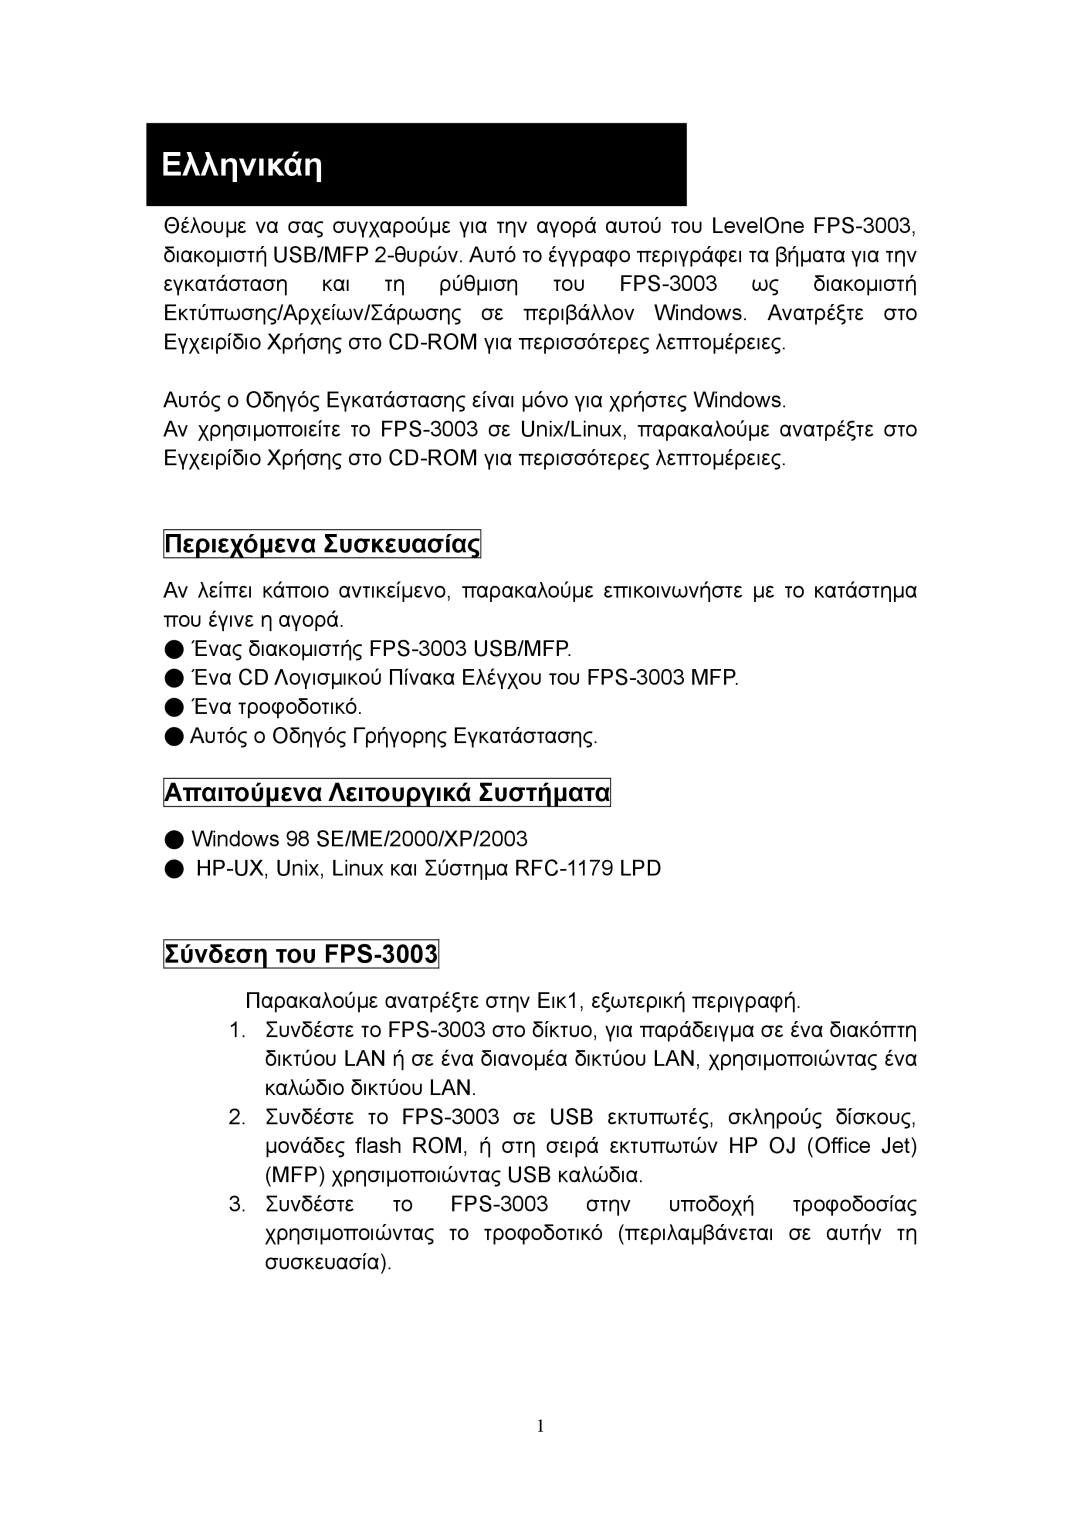 LevelOne manual Ελληνικάη, Περιεχόµενα Συσκευασίας, Απαιτούµενα Λειτουργικά Συστήµατα, Σύνδεση του FPS-3003 